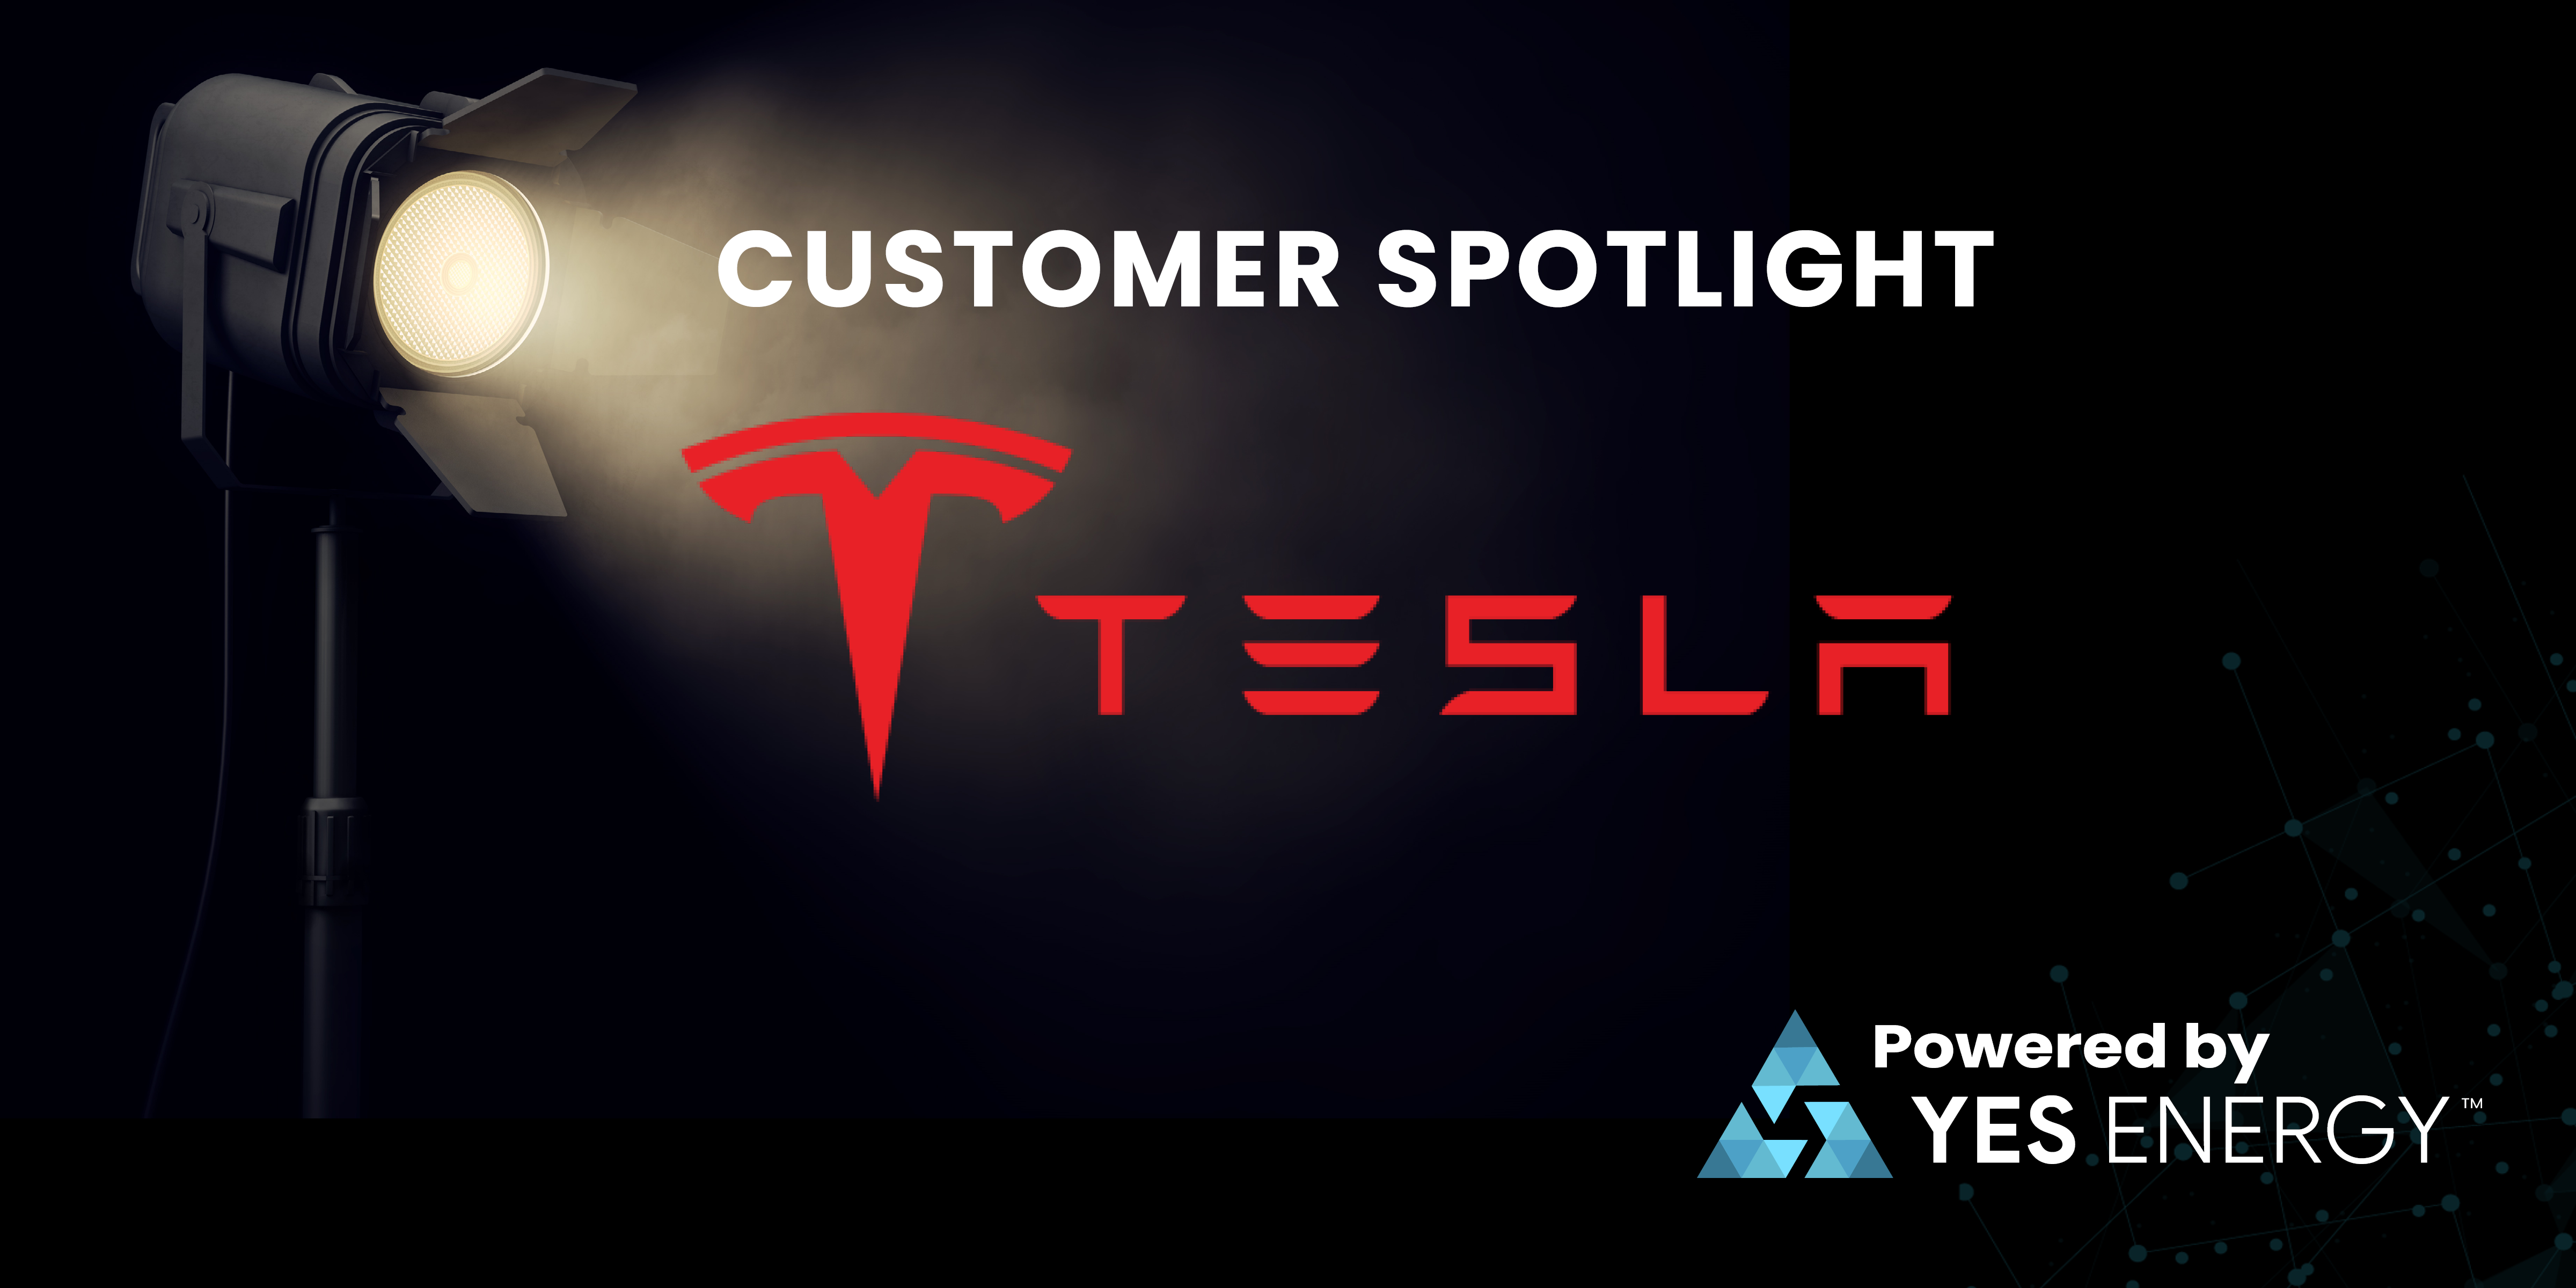 customer spotlight with Tesla logo